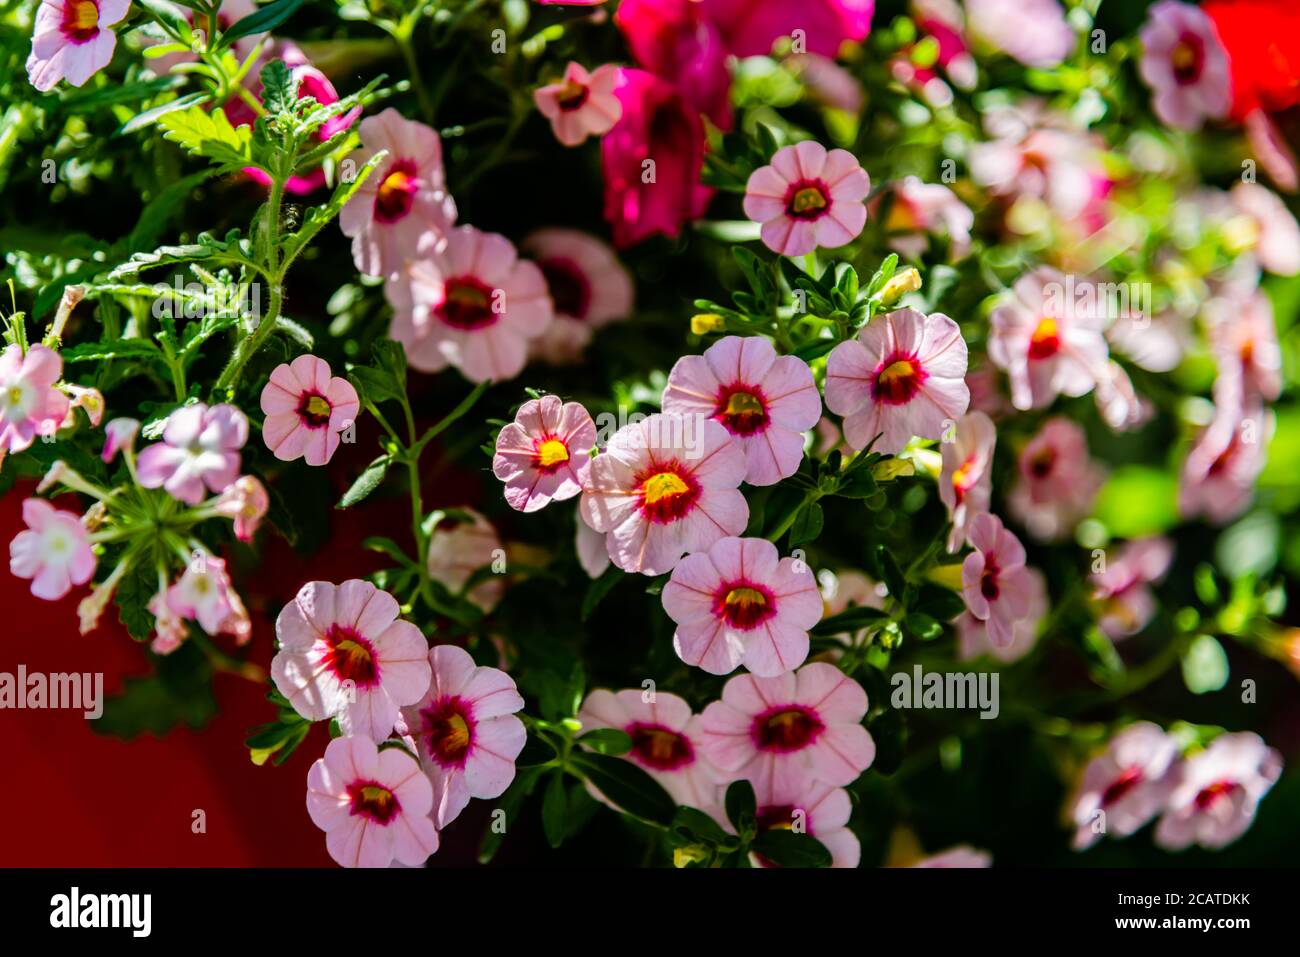 Petunia flowers in the garden Stock Photo